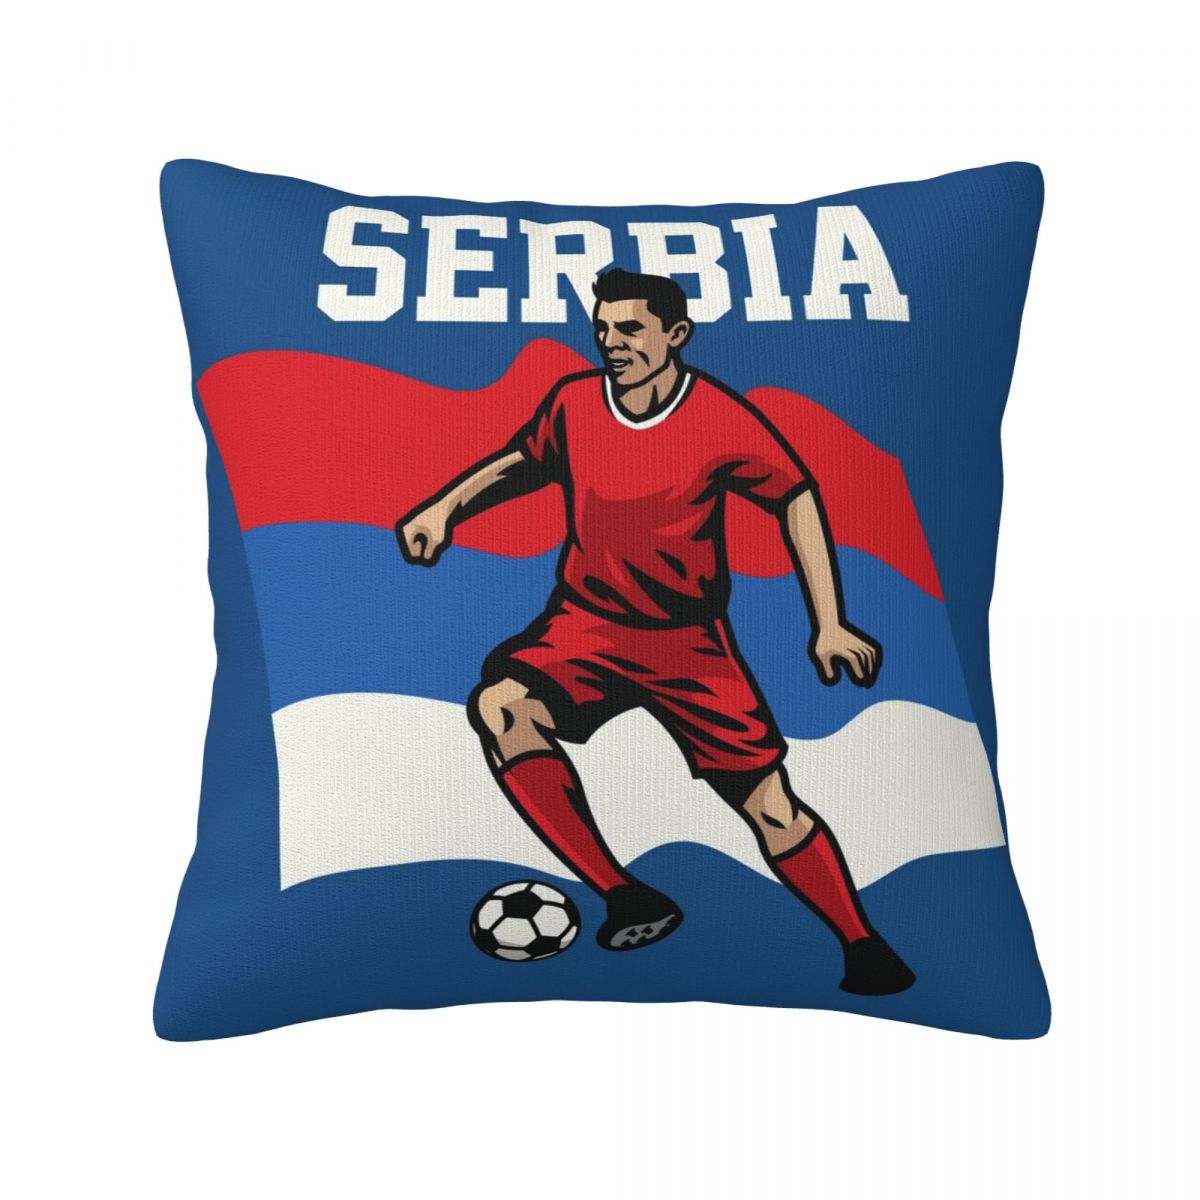 Serbia Soccer Player Decorative Throw Pillow